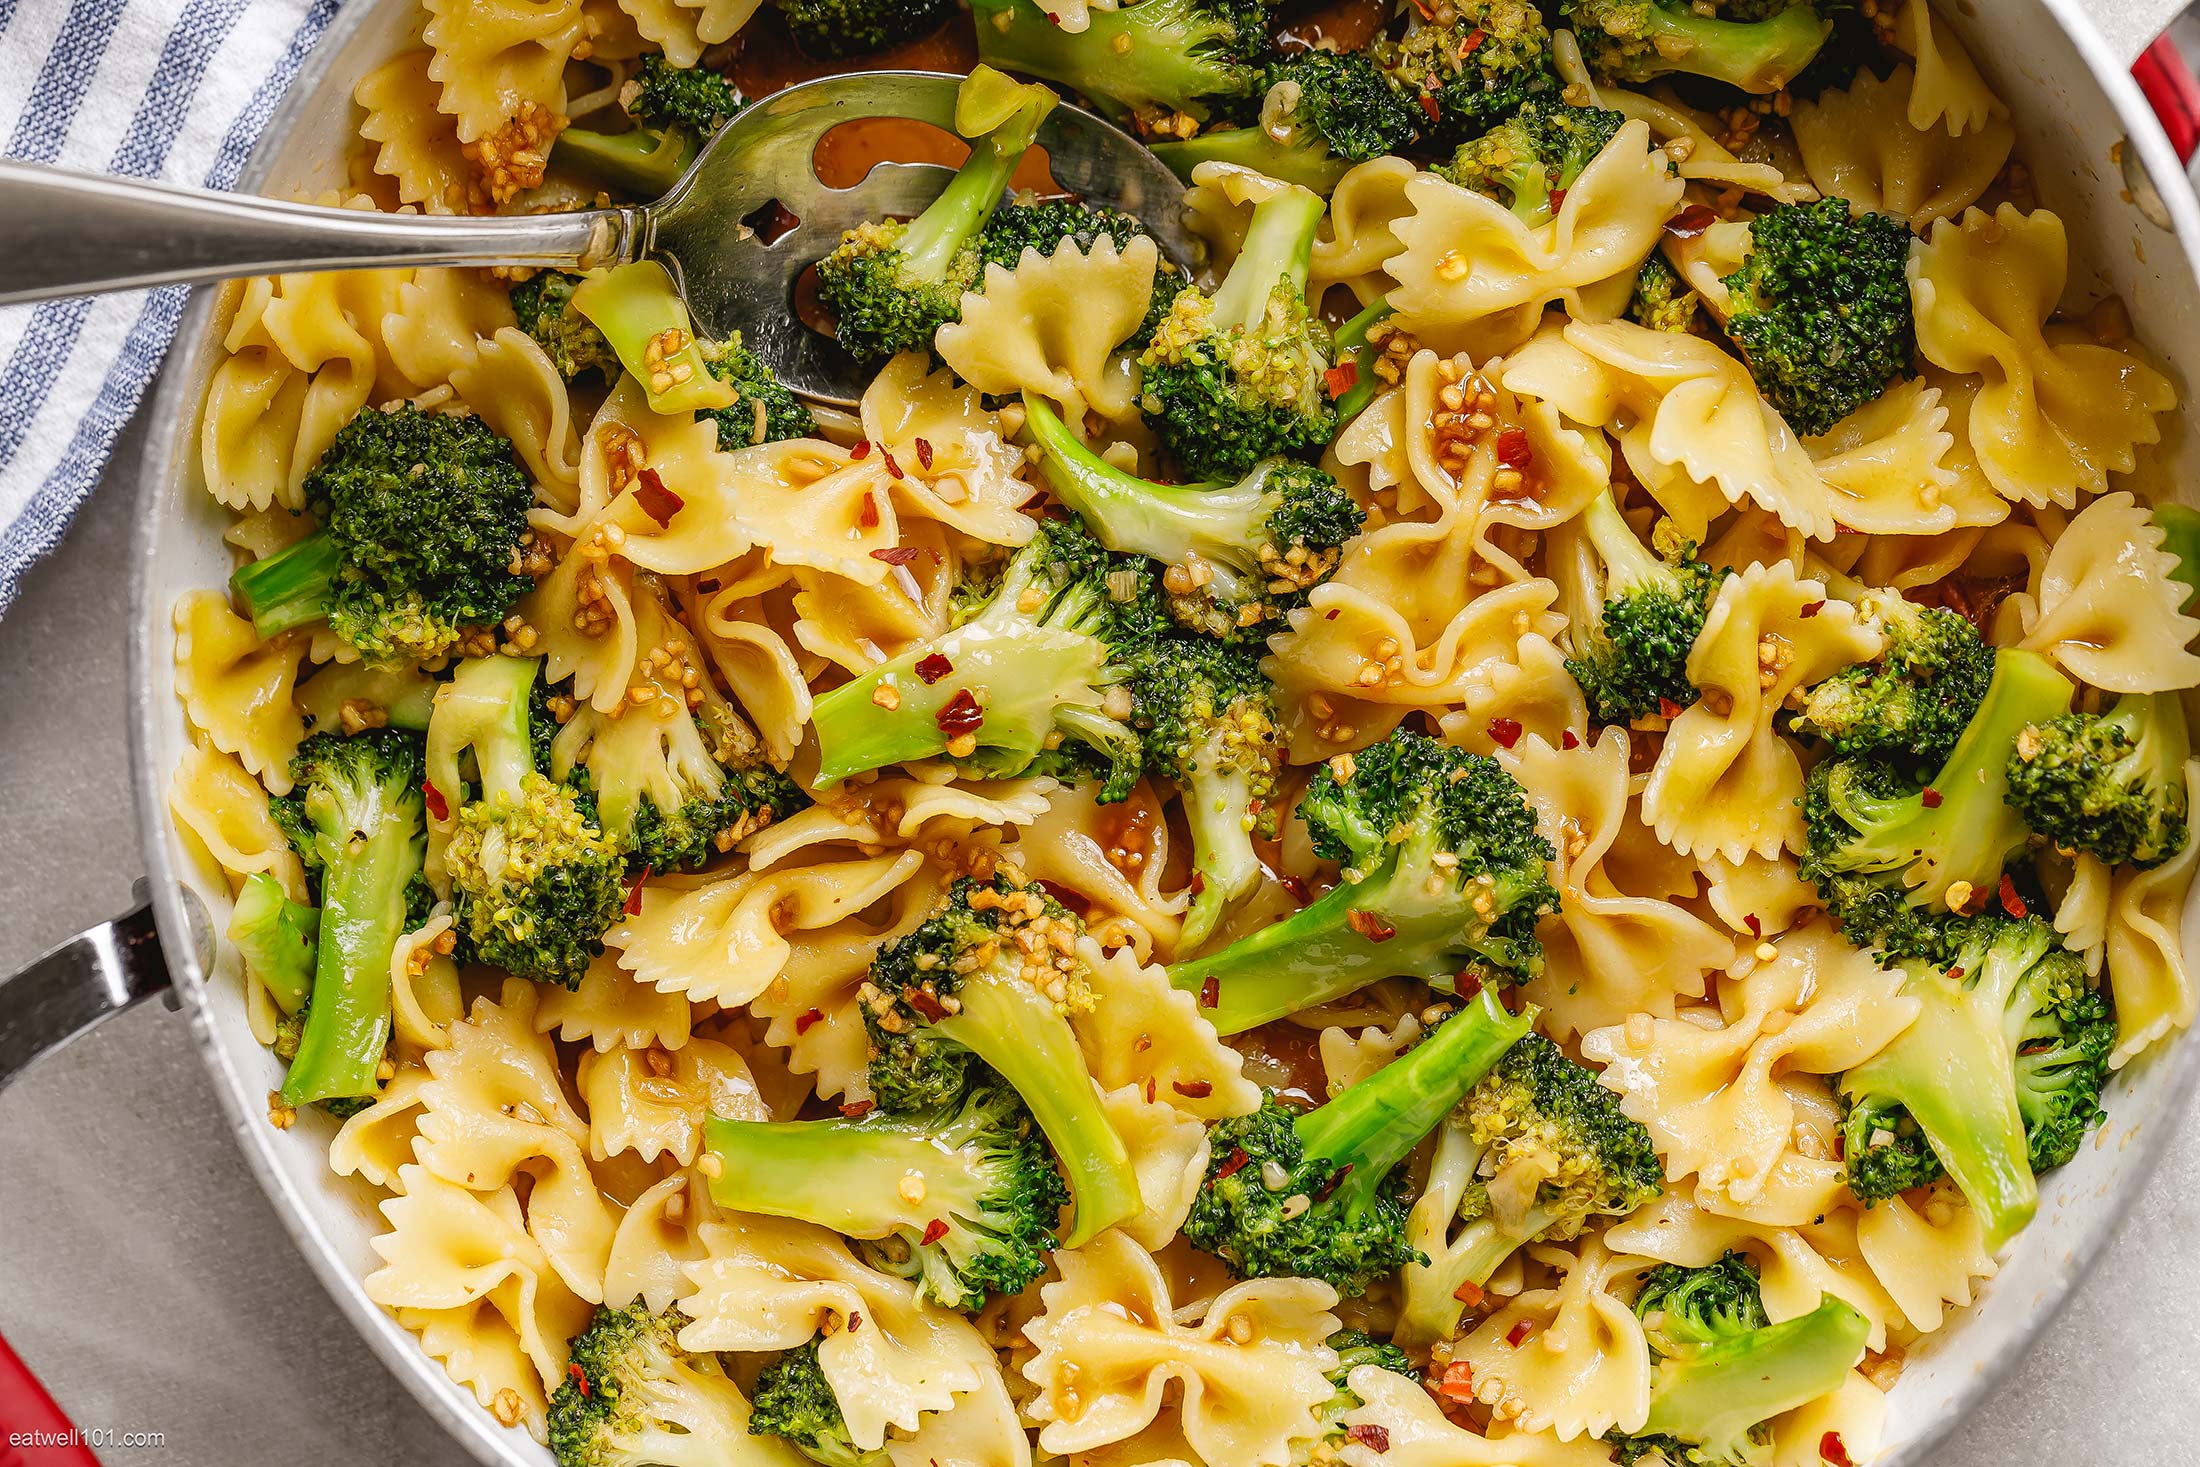 Garlic Broccoli Stir-Fry with Pasta